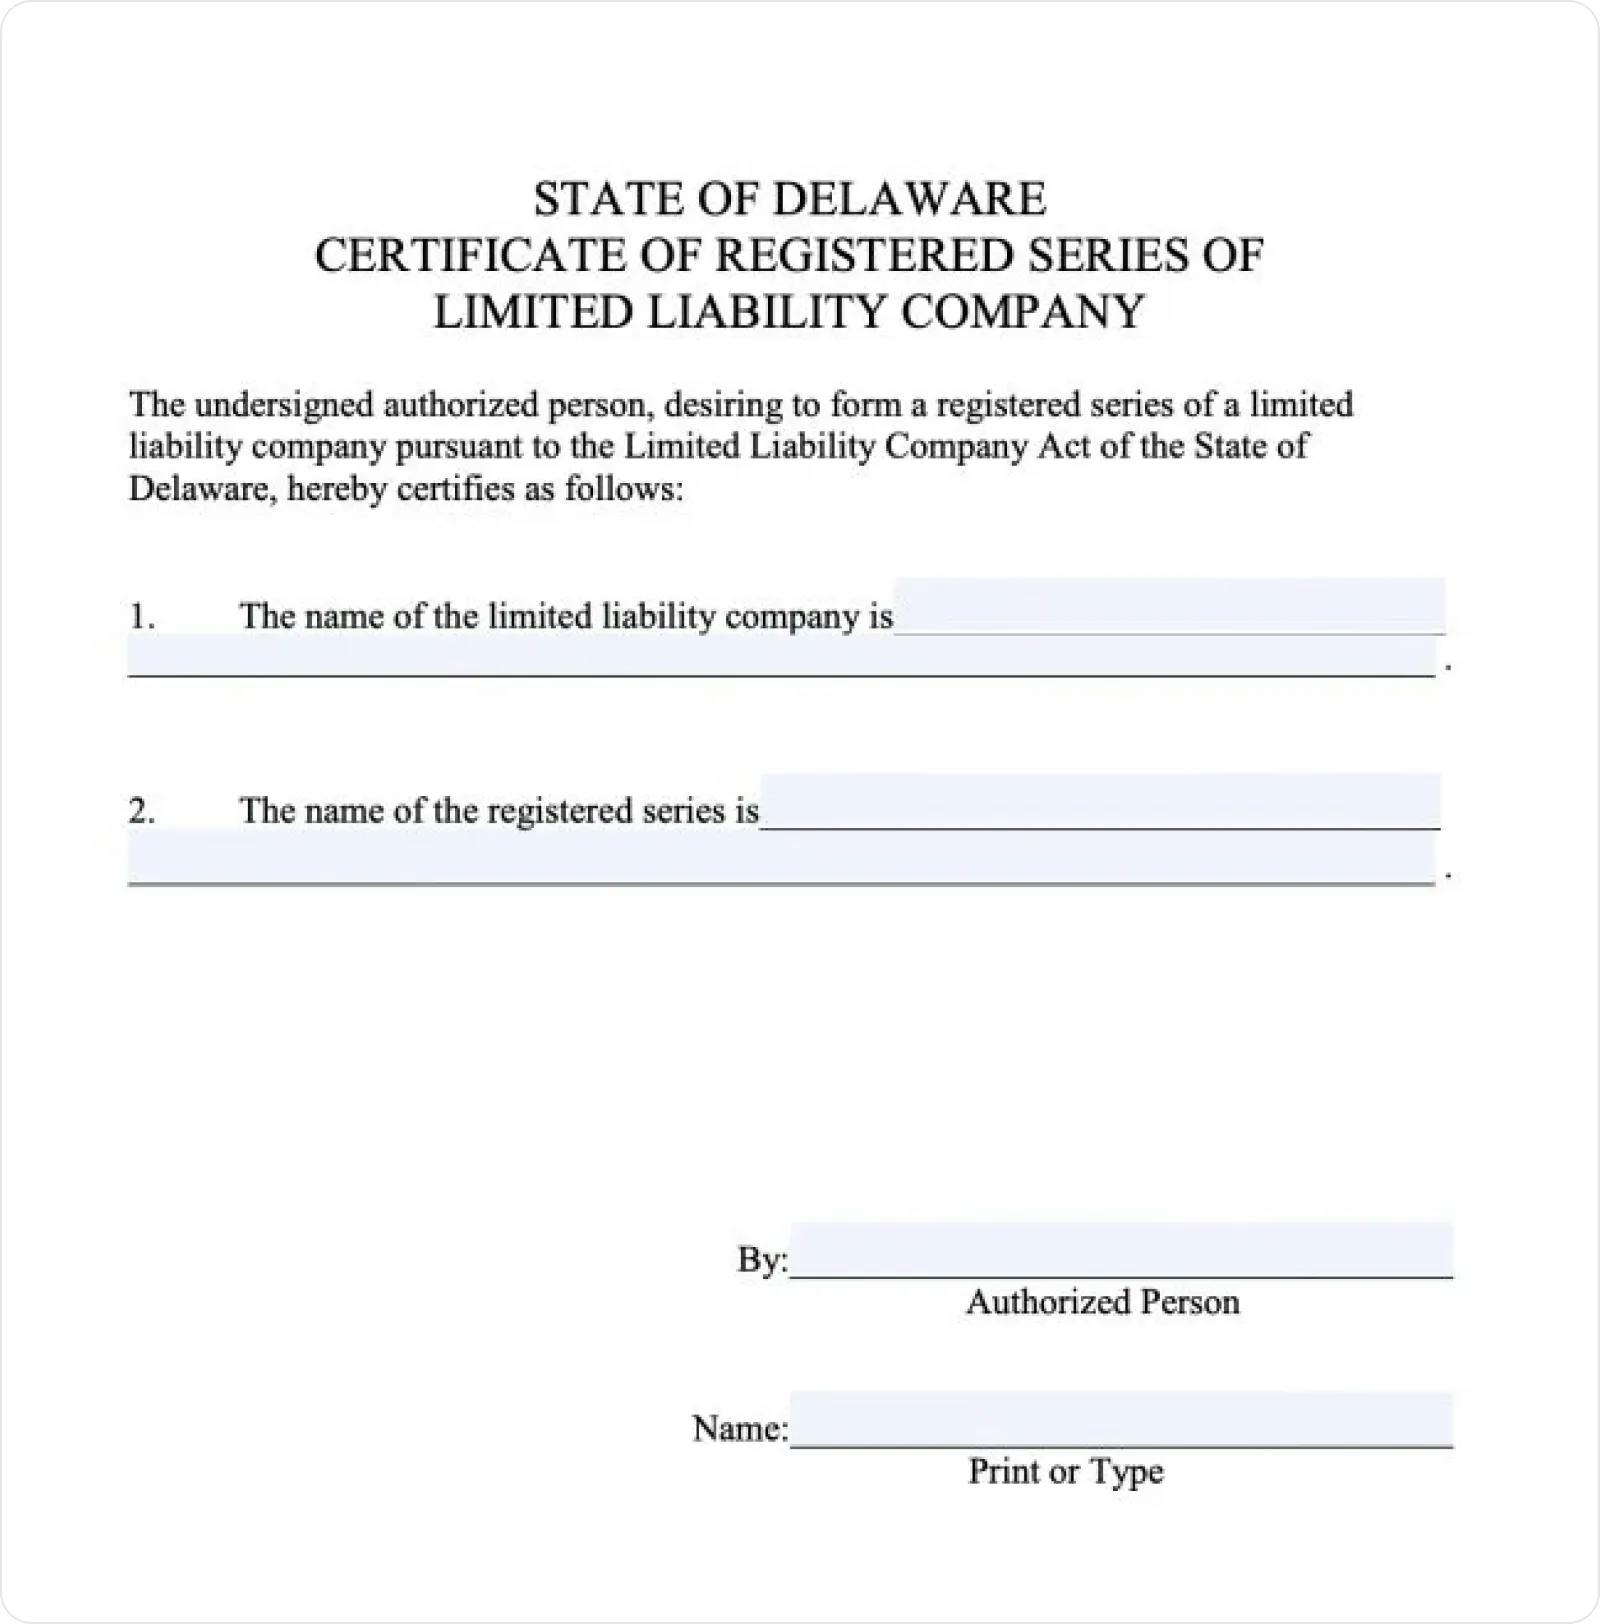 State of Delaware Certificate od registered series of LLC